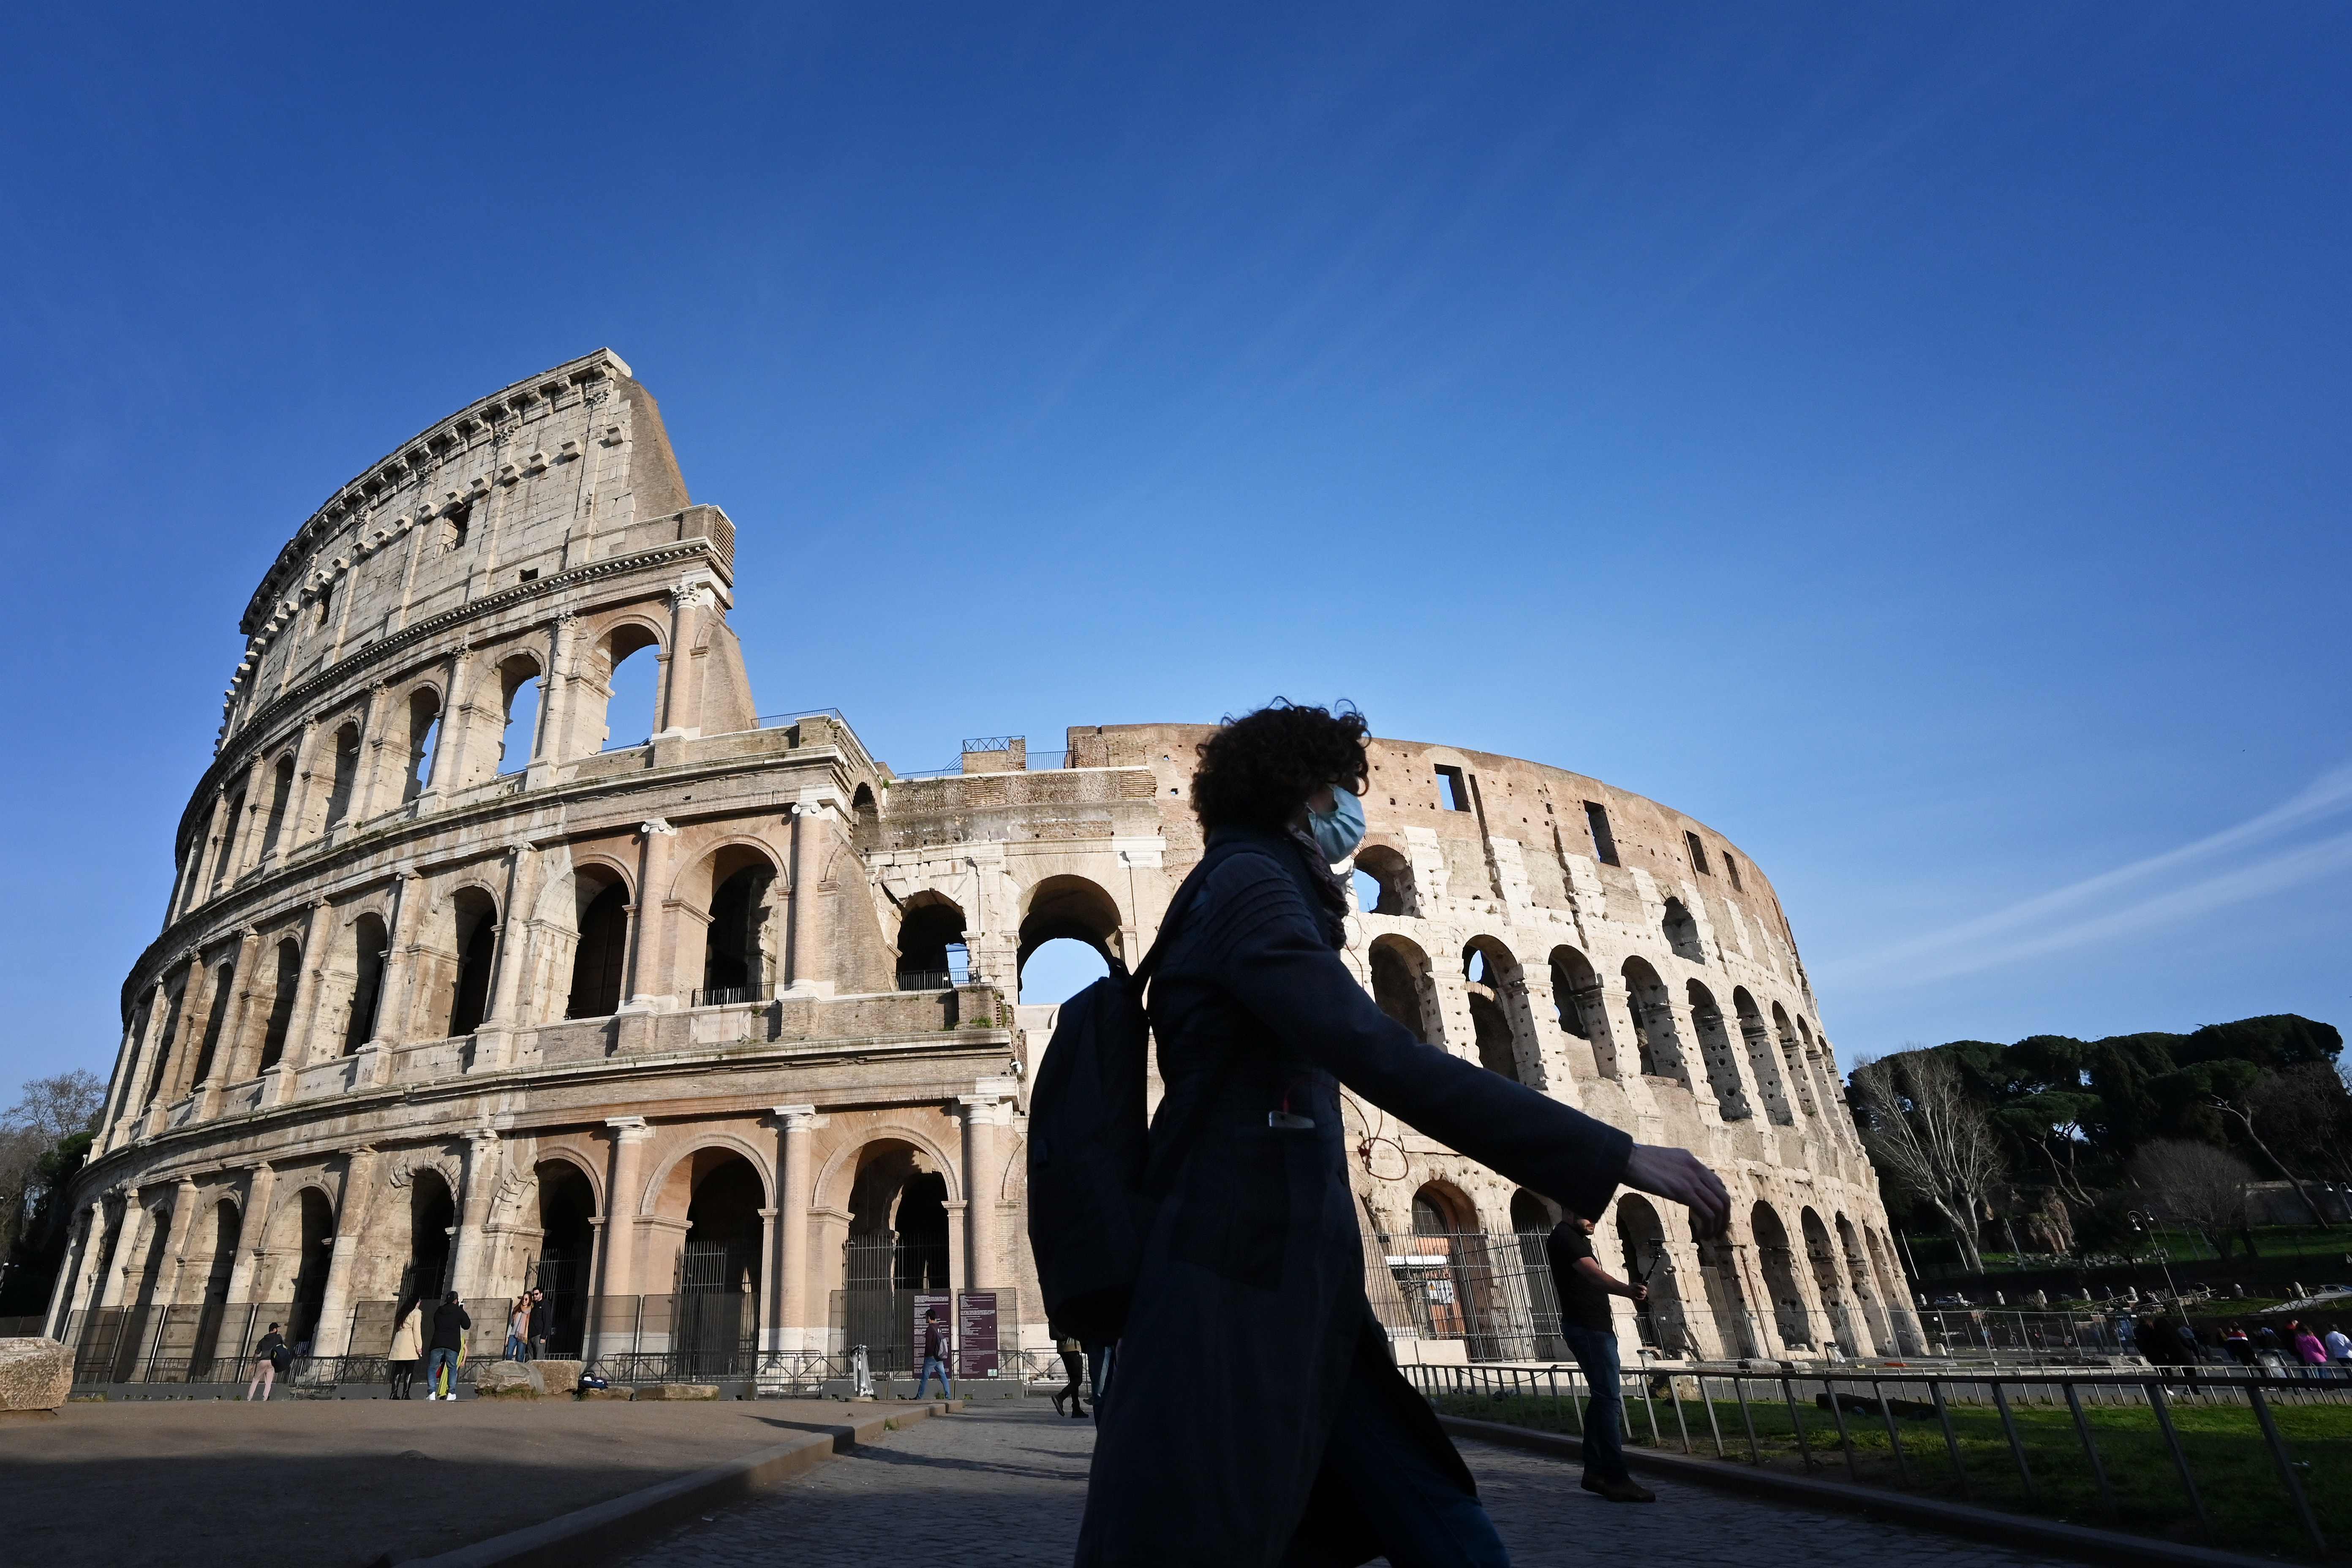 Una mujer con una mascarilla camina frente al histórico Coliseo de Roma en la capital italiana. (Foto Prensa Libre: EFE)